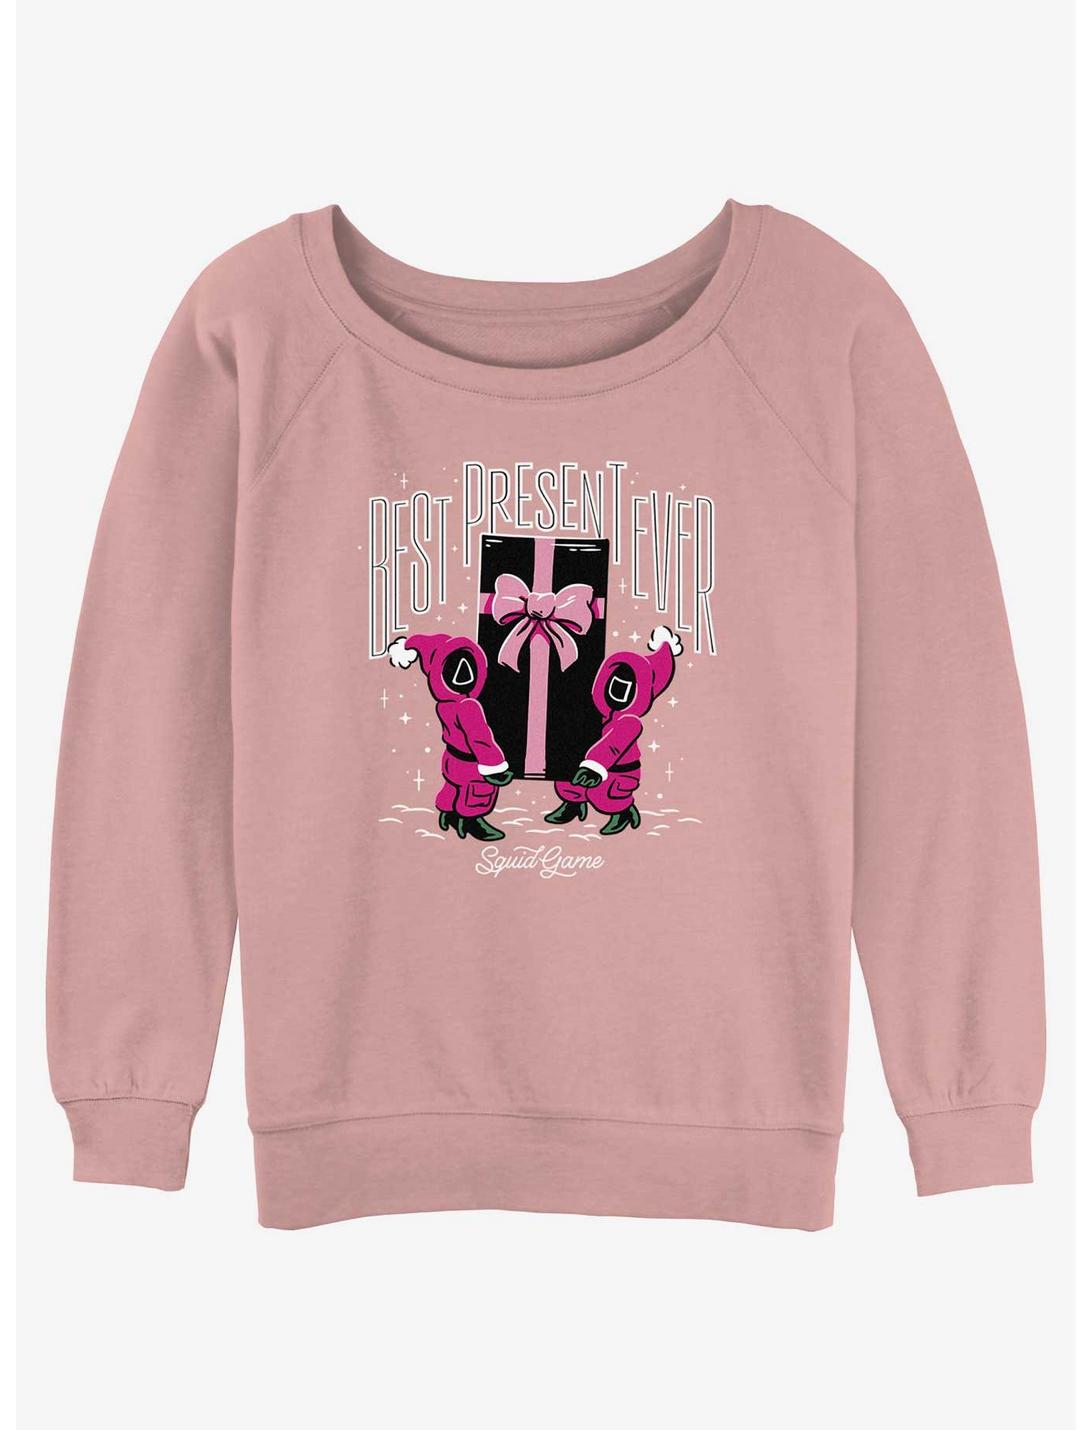 Squid Game Pink Soliders Best Present Ever Womens Slouchy Sweatshirt, DESERTPNK, hi-res